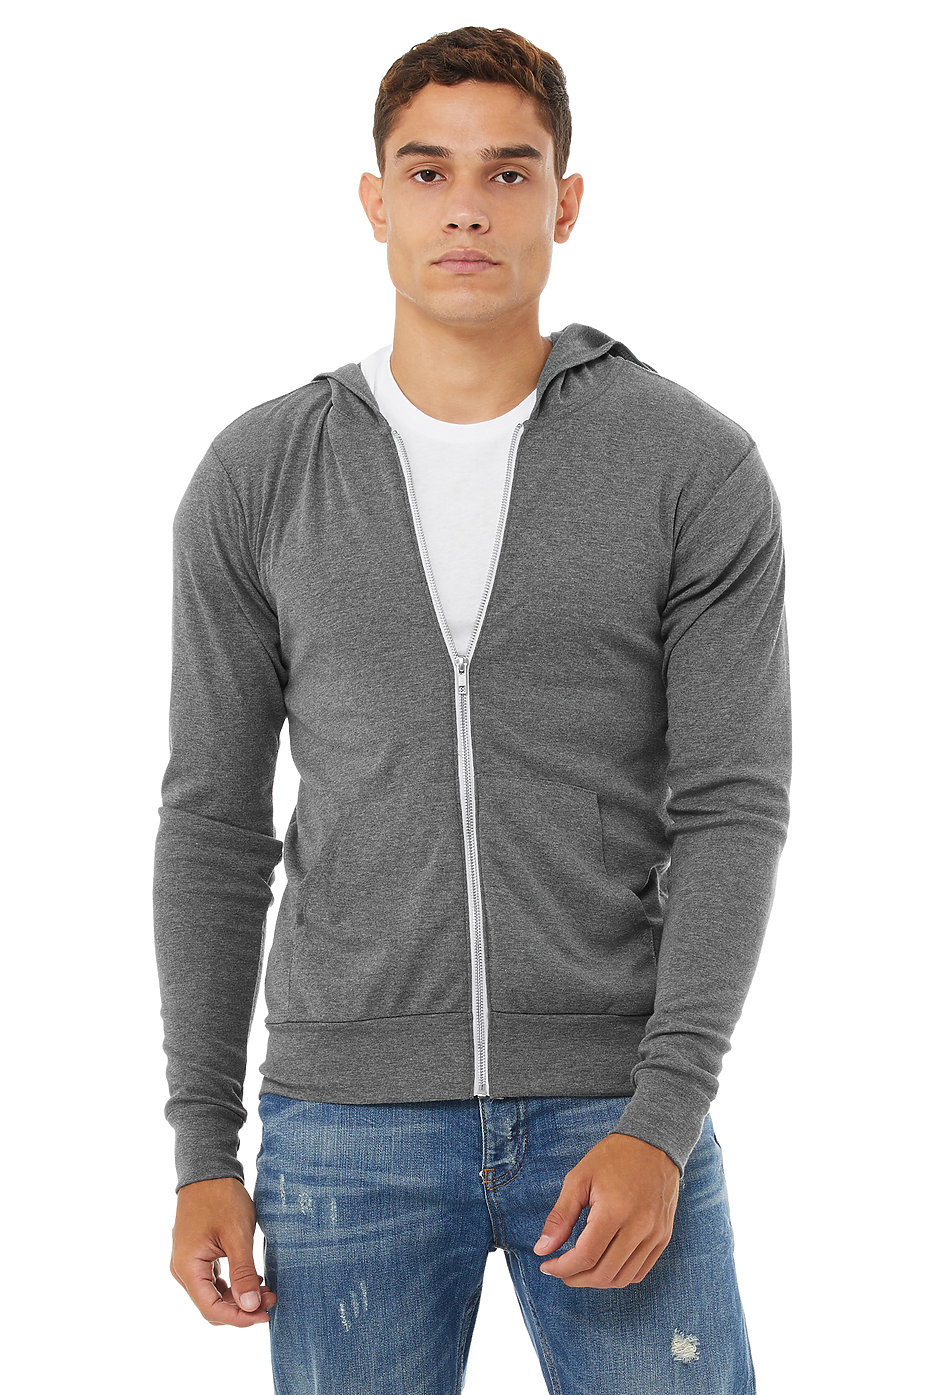 Wholesale Zip Up Hoodie | Custom Sweatshirts For Men | Wholesale